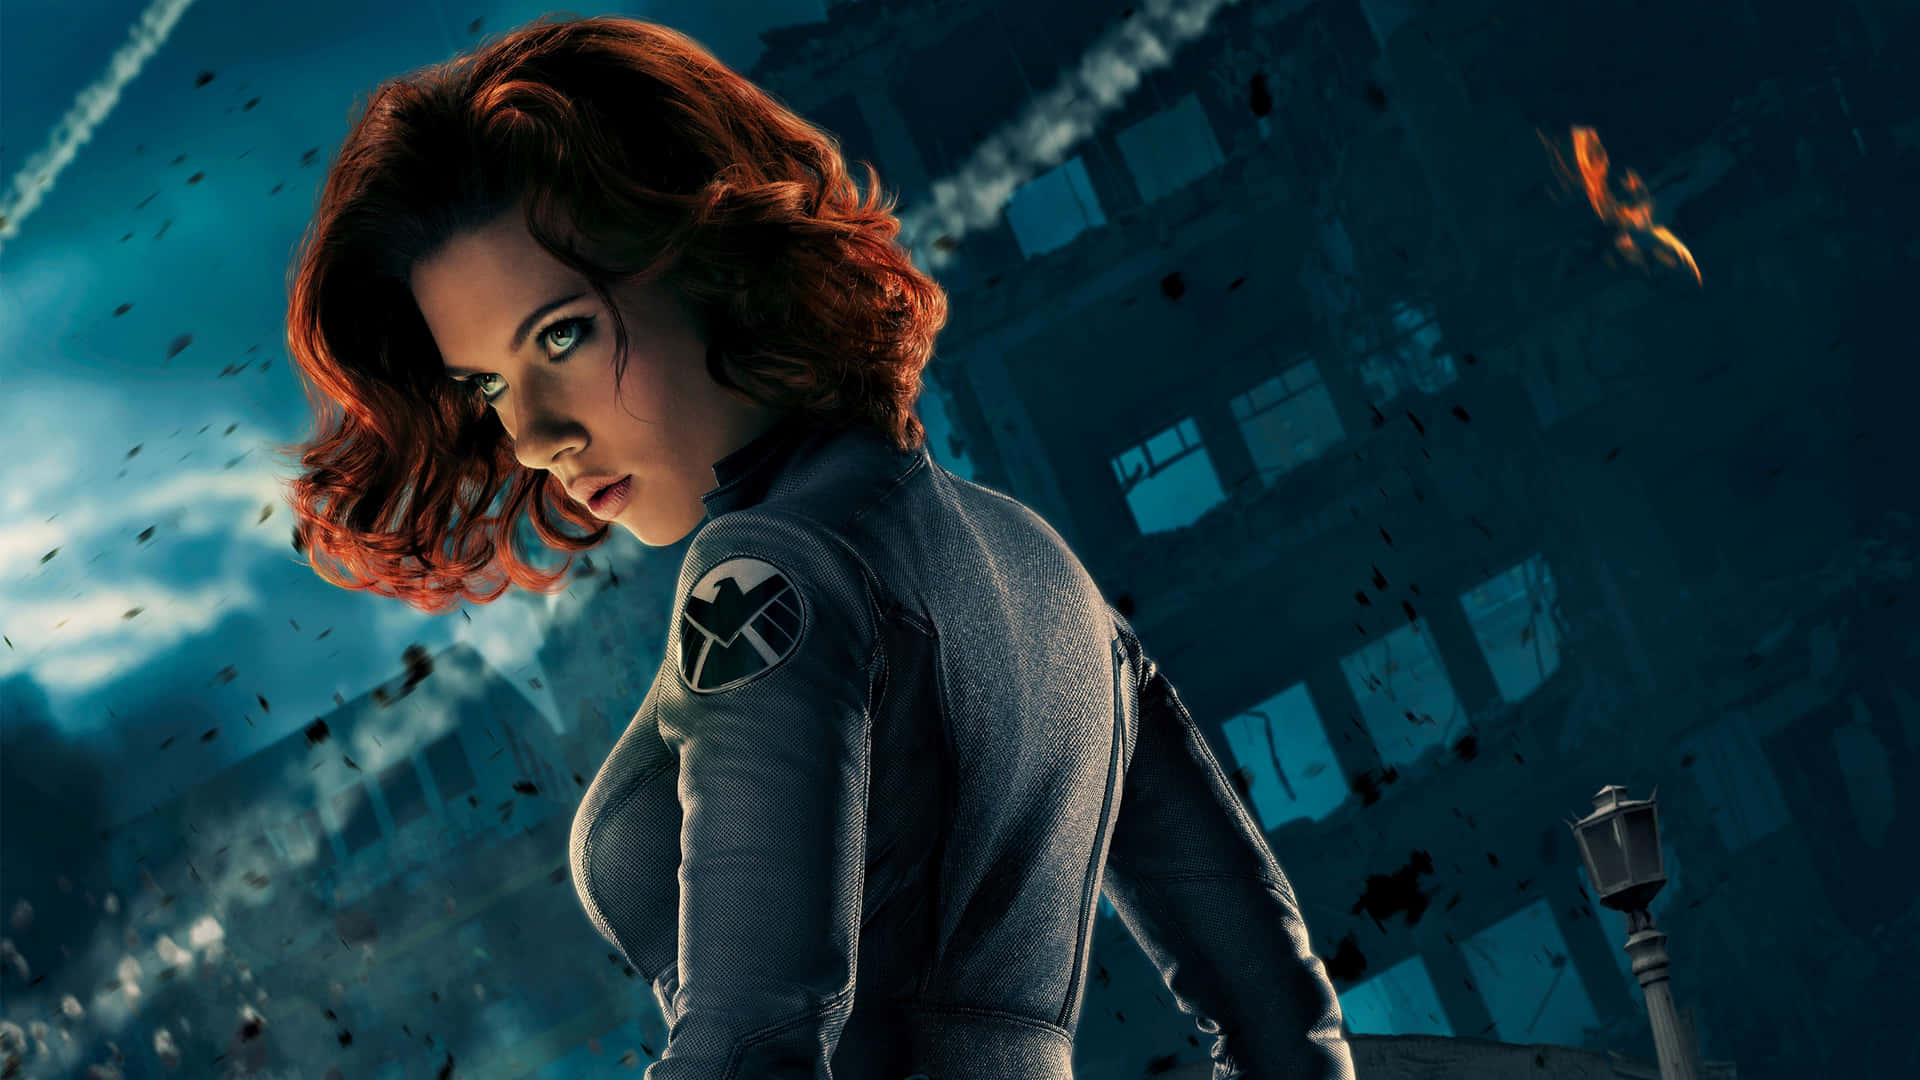 Scarlett Johansson as Natasha Romanoff, A.K.A Black Widow